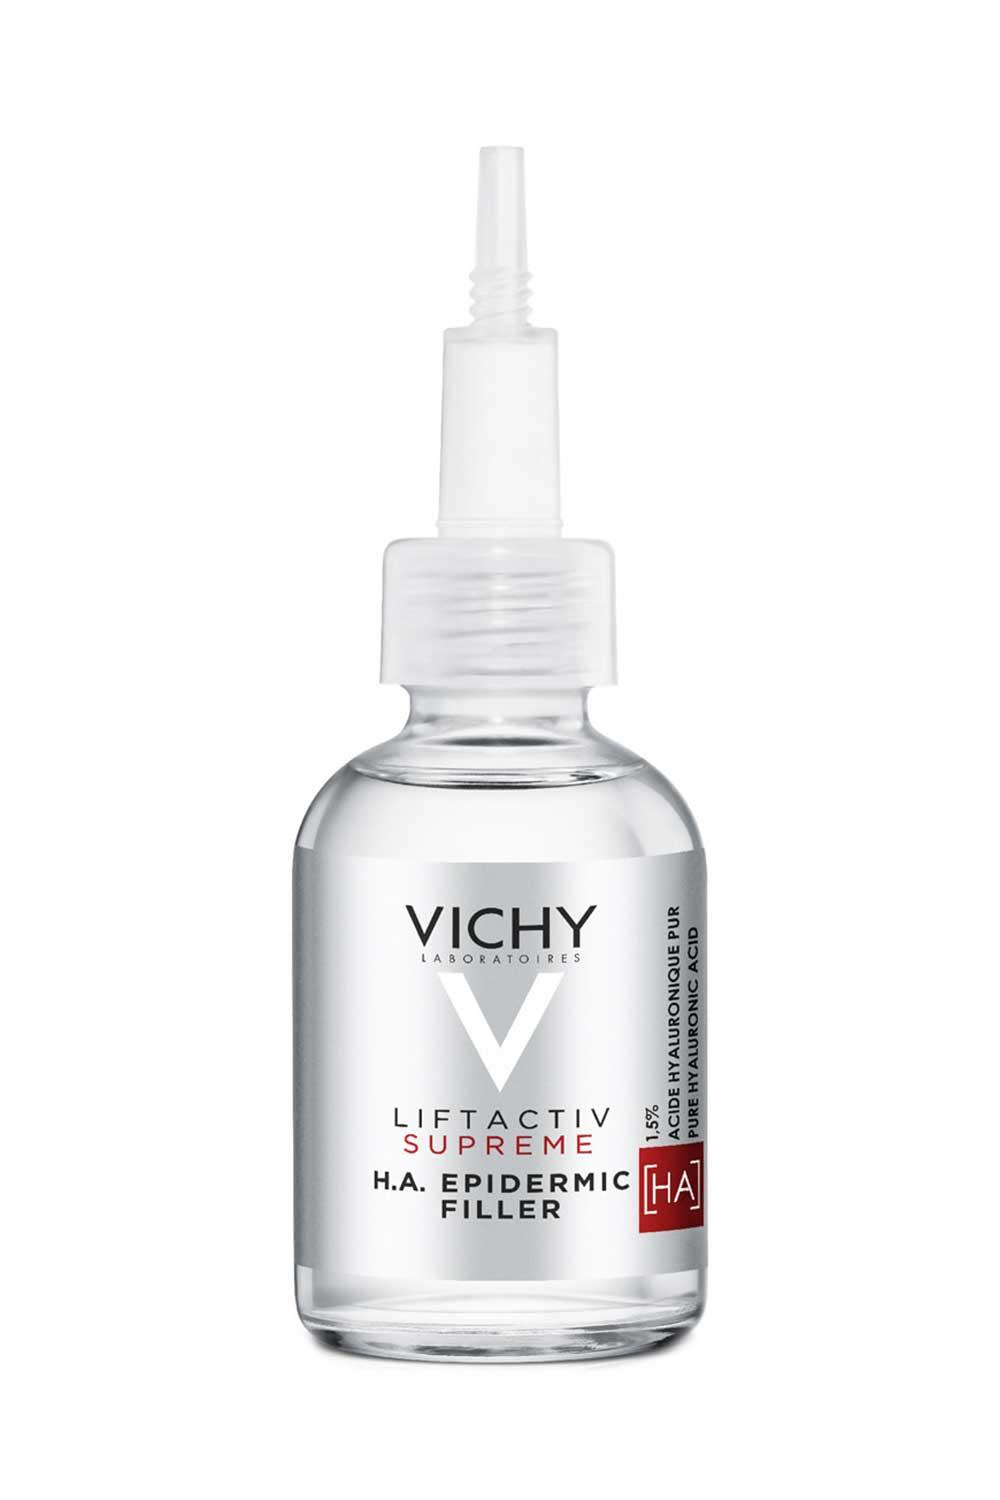 Vochu5. Sérum Liftactiv Supreme H.A. Epidermic Filler 30 ml Vichy